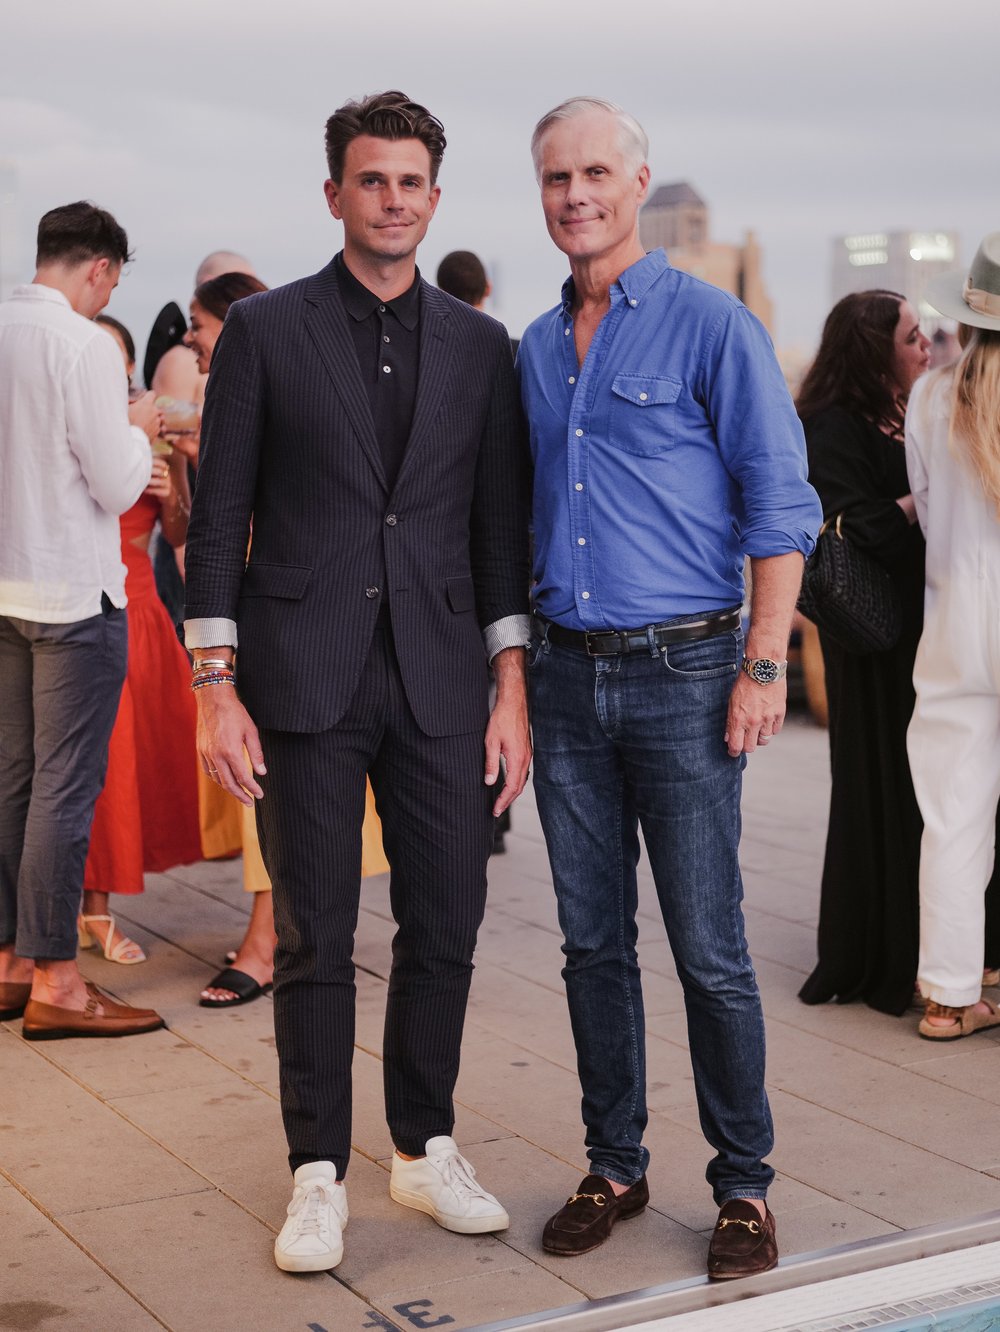    Photo: Ben Rosser/BFA.com     5/14    John Wattiker and Malcolm Carfrae Attend The Australian Fashion Foundation Annual Summer Soirée in New York City on Tuesday, August 15, 2023.   